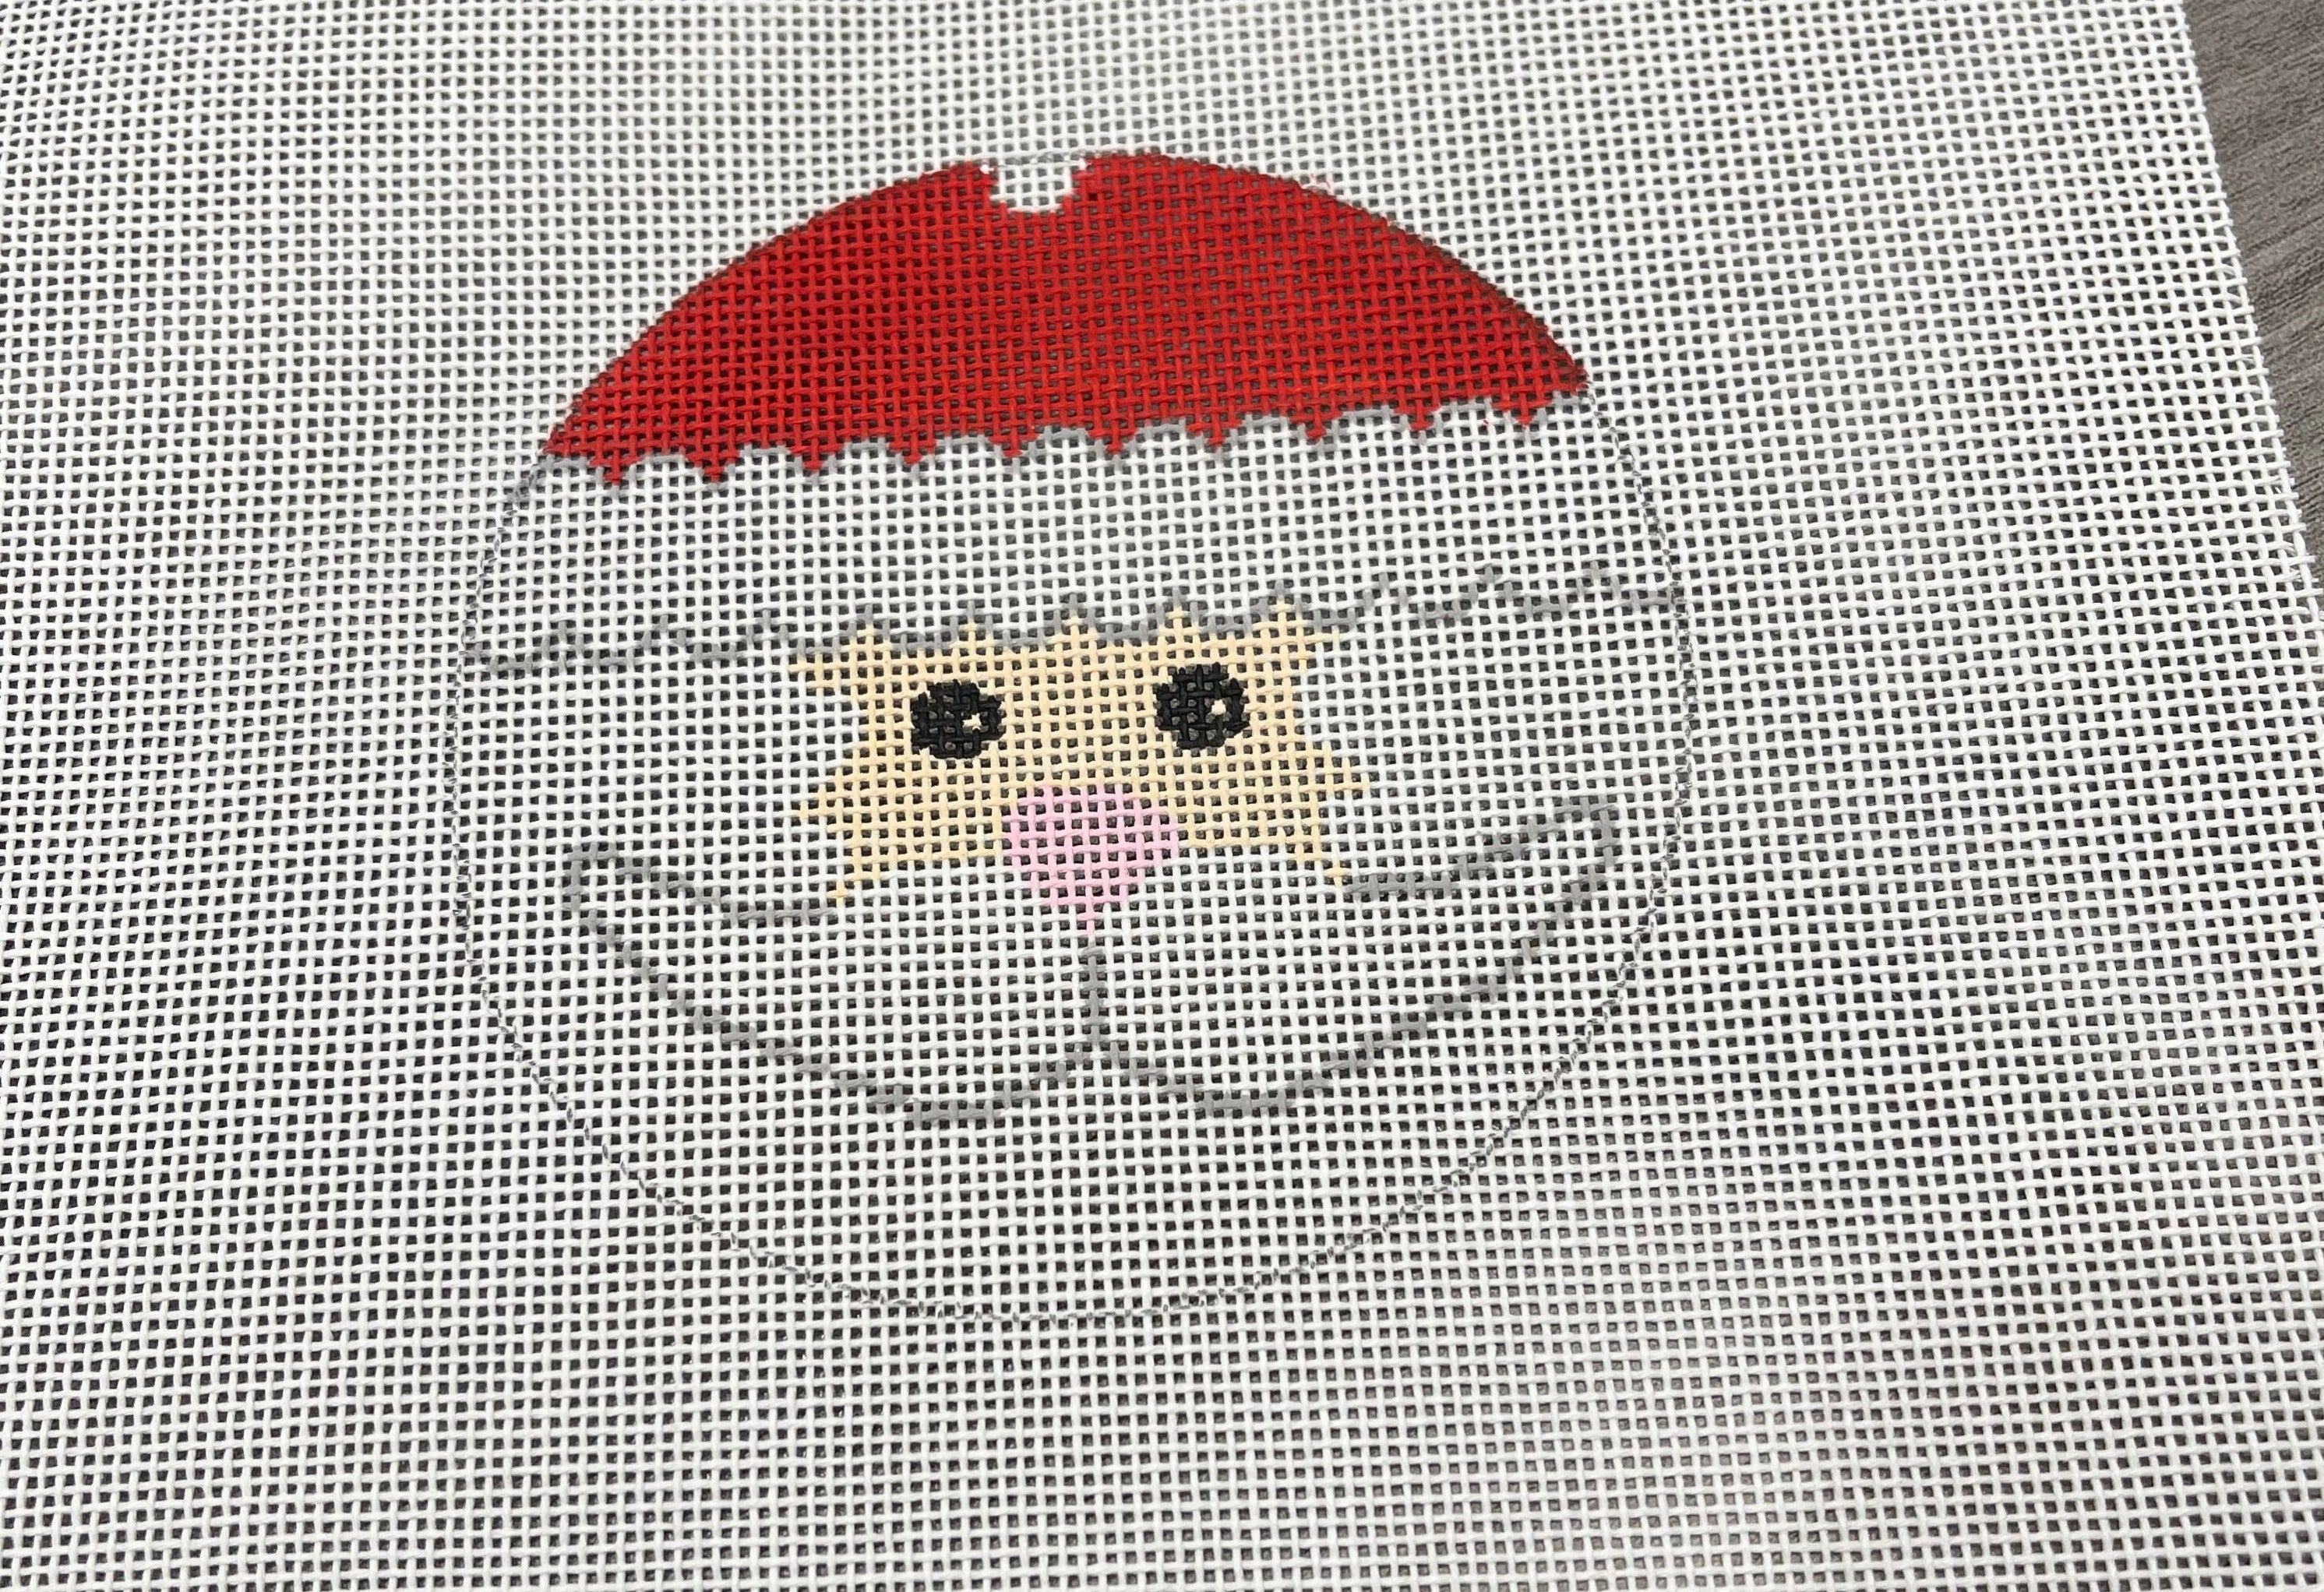 Stitch Style Needlepoint SS108 Santa Face Round